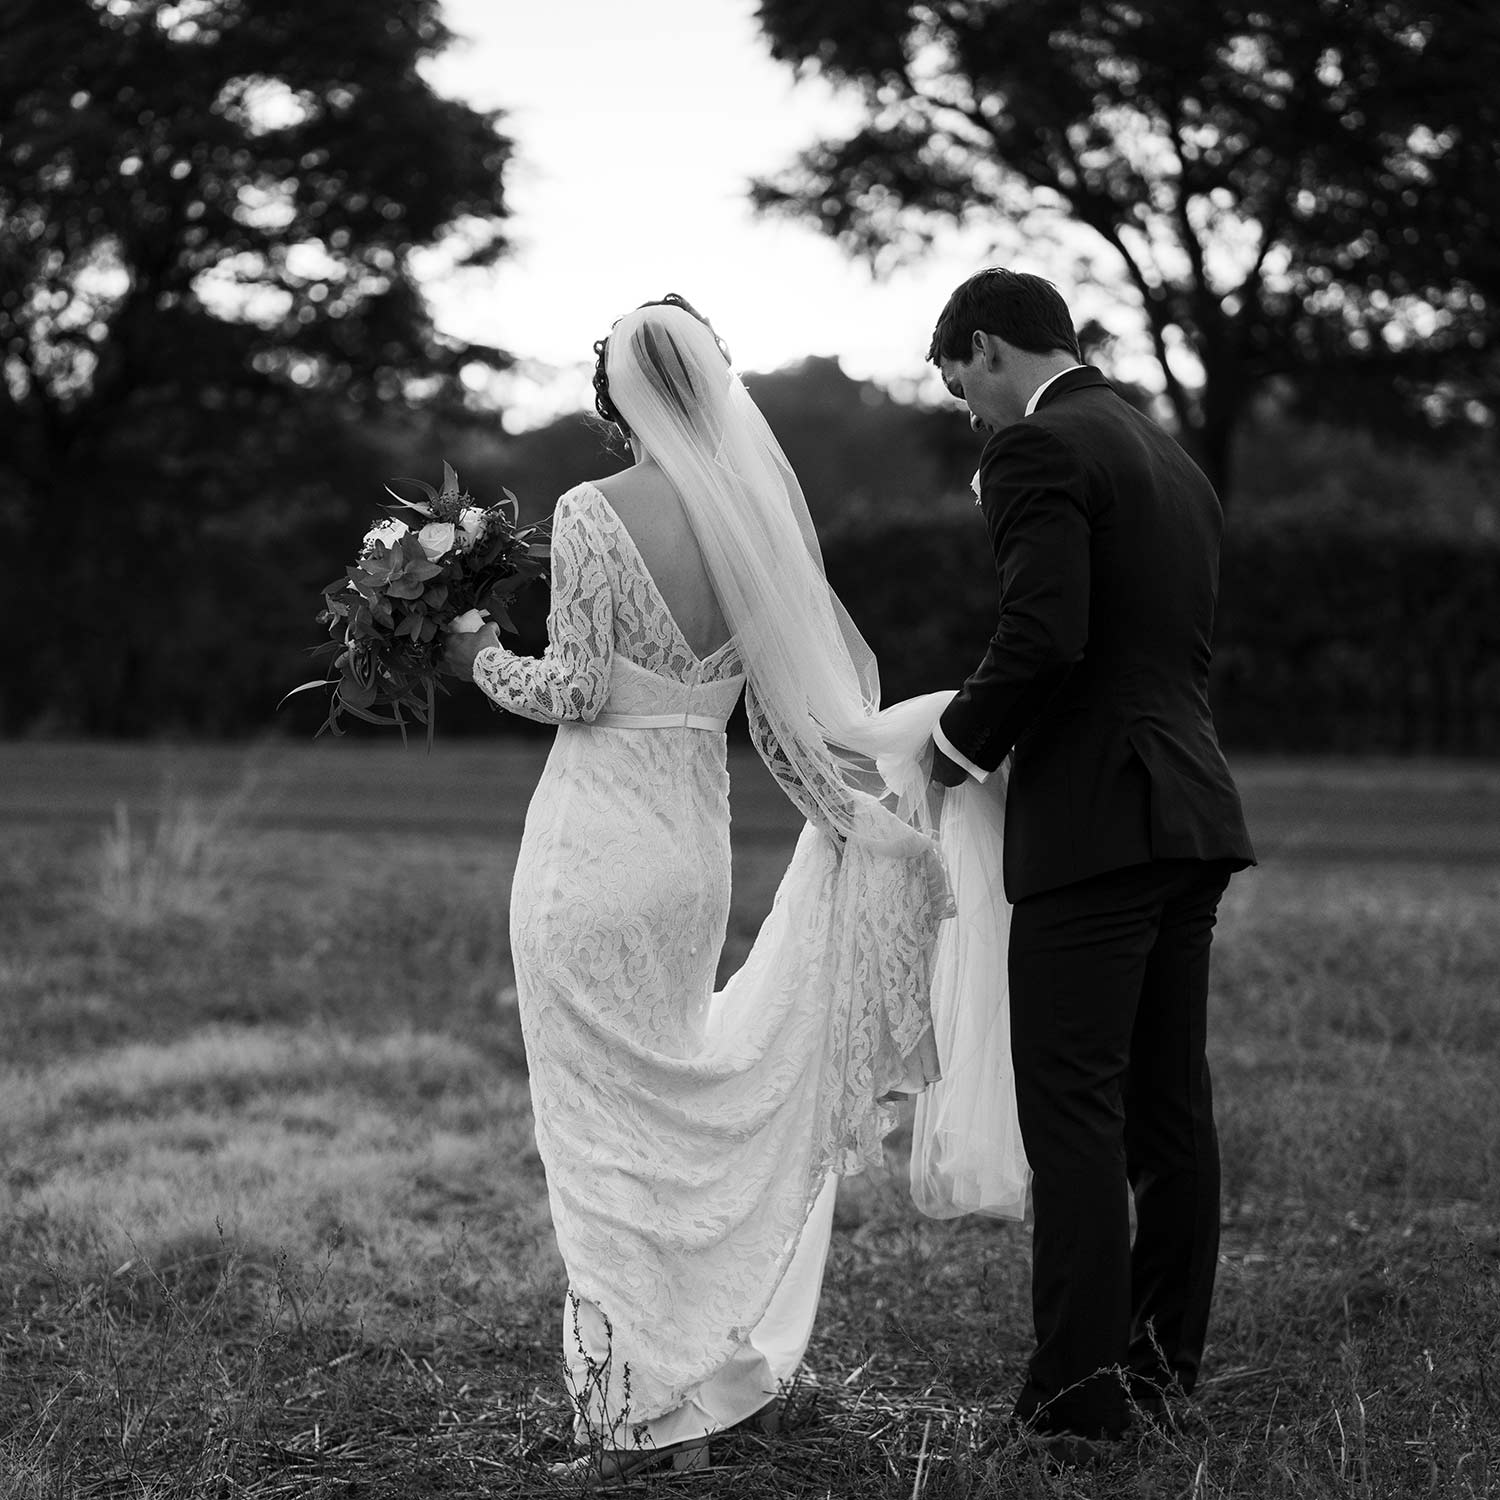 Sittella Winery wedding bride with groom holding her dress